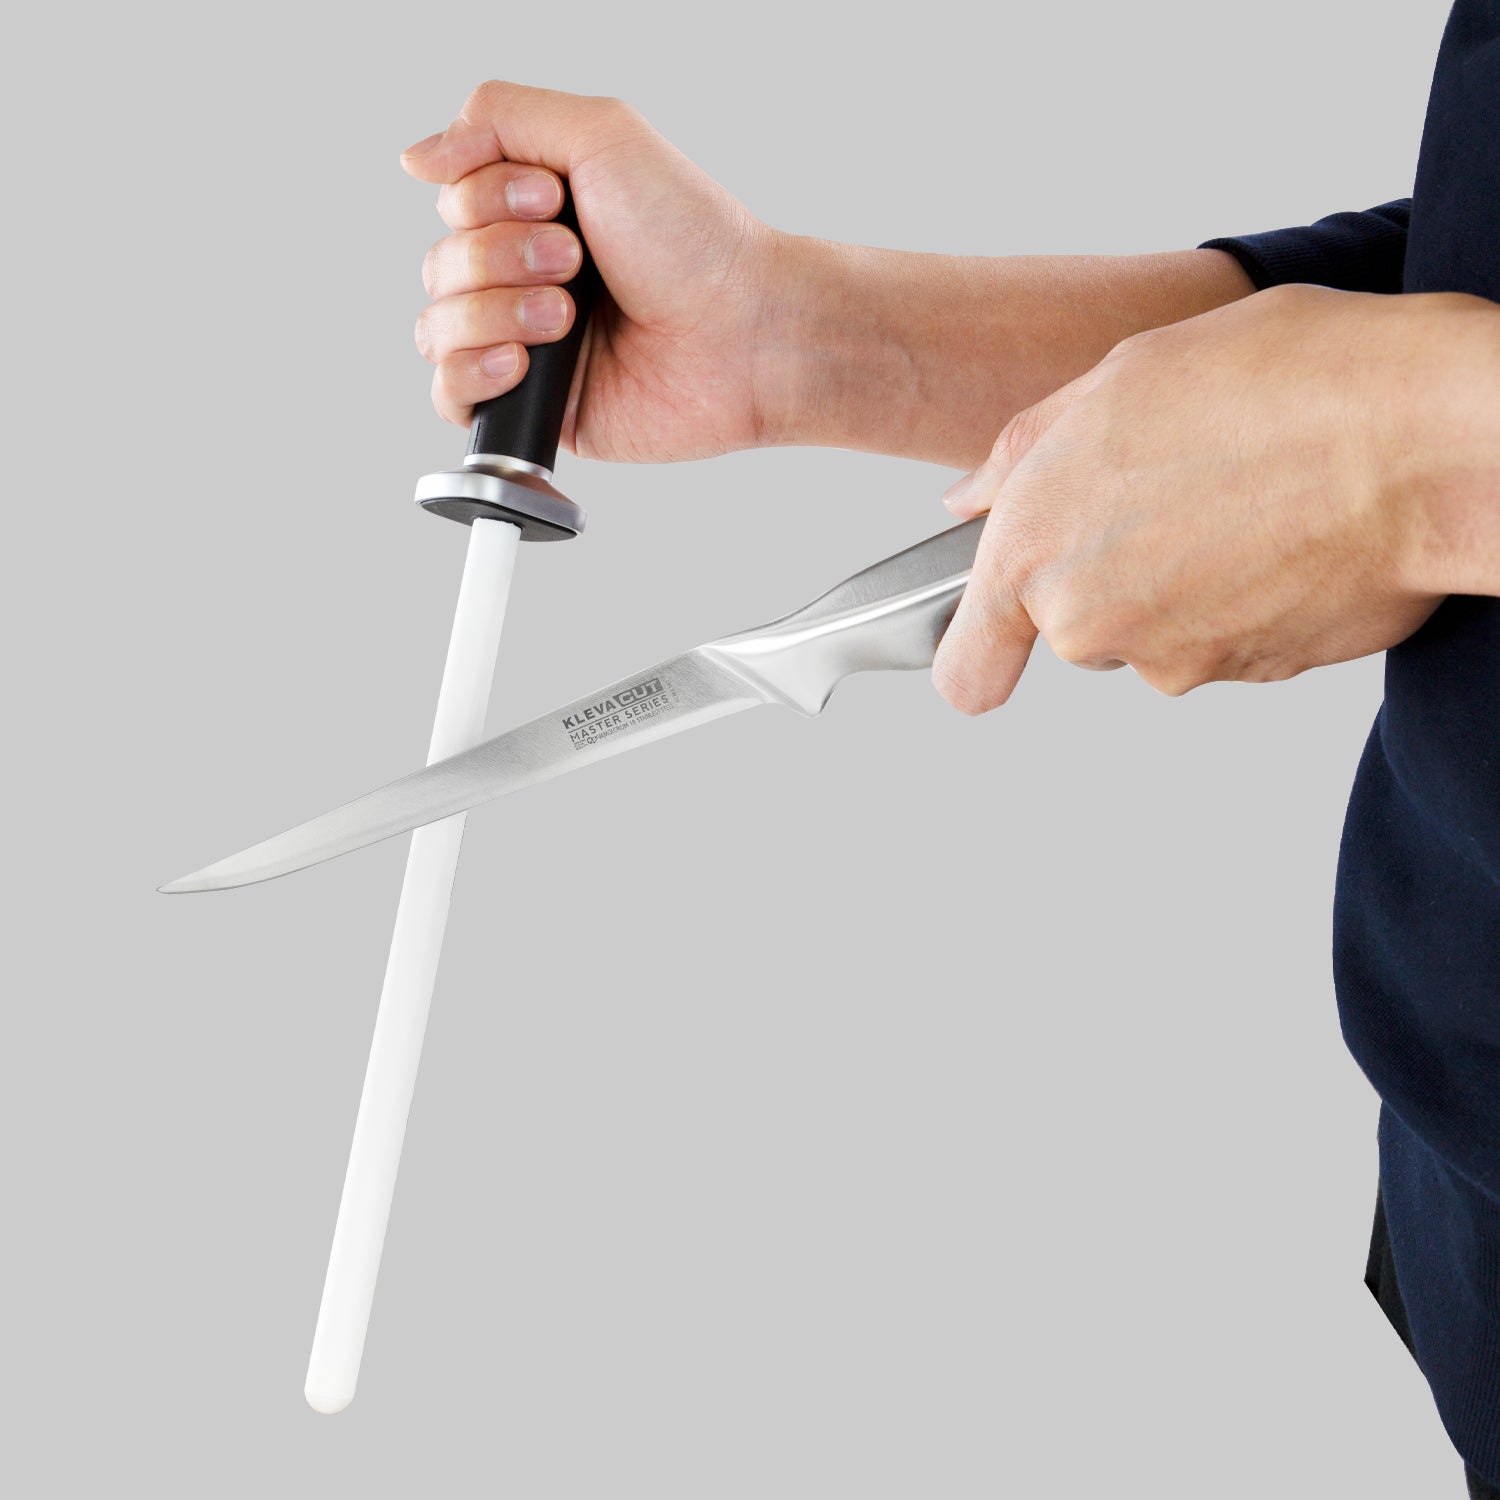 Get An Ultra Sharp, Smooth Knife Edge With Kleva Ceramic Sharpening Ro –  Kleva Range - Everyday Innovations